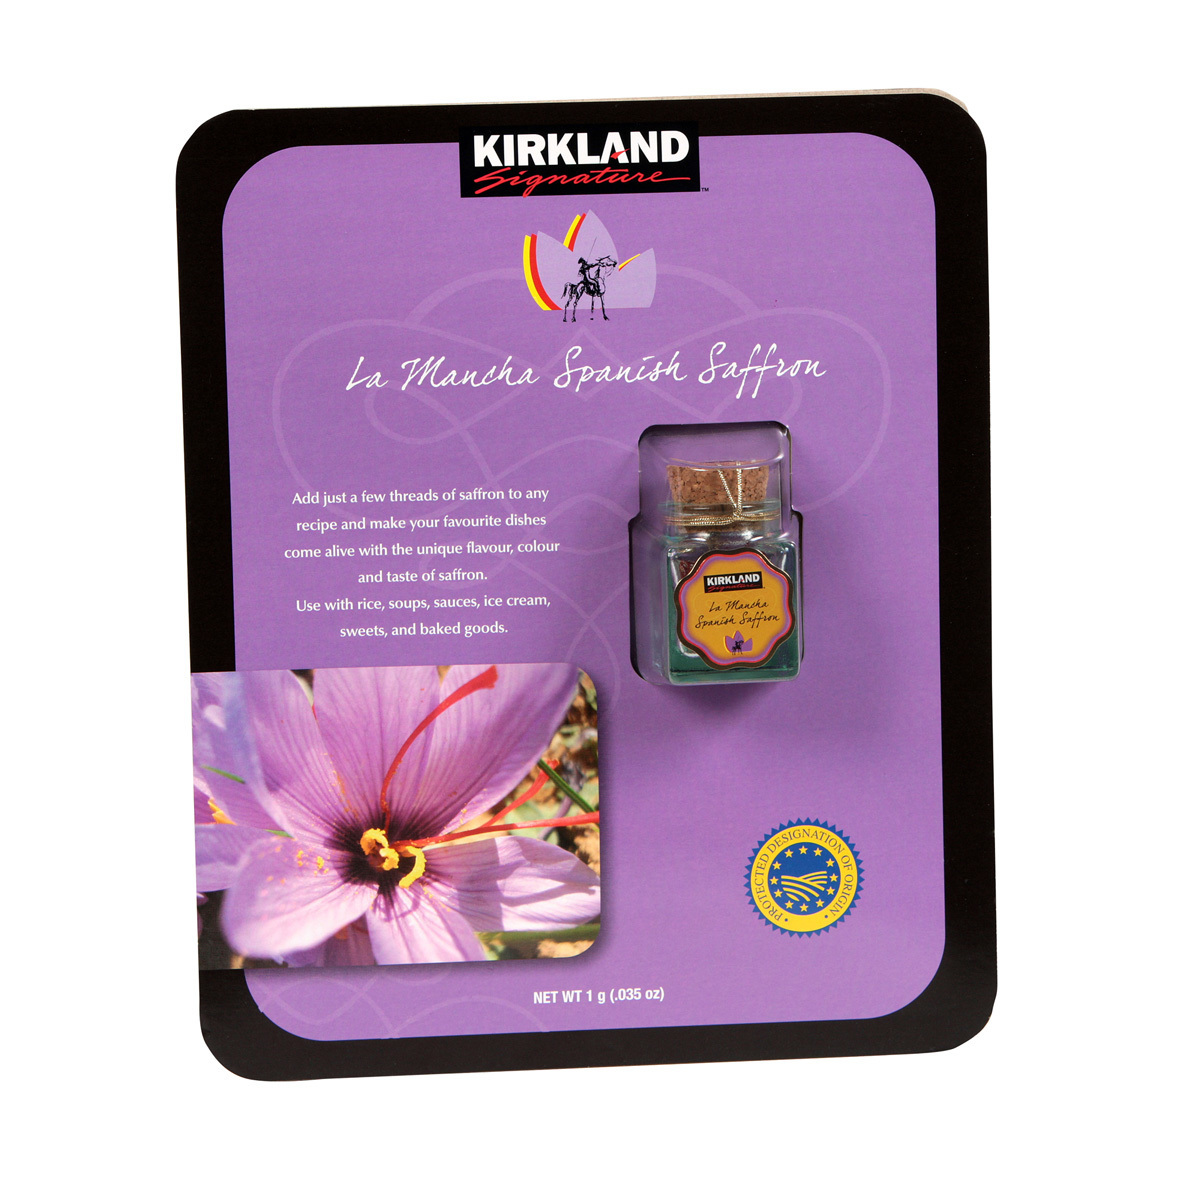 Kirkland Signature La Mancha Spanish Saffron, 1g